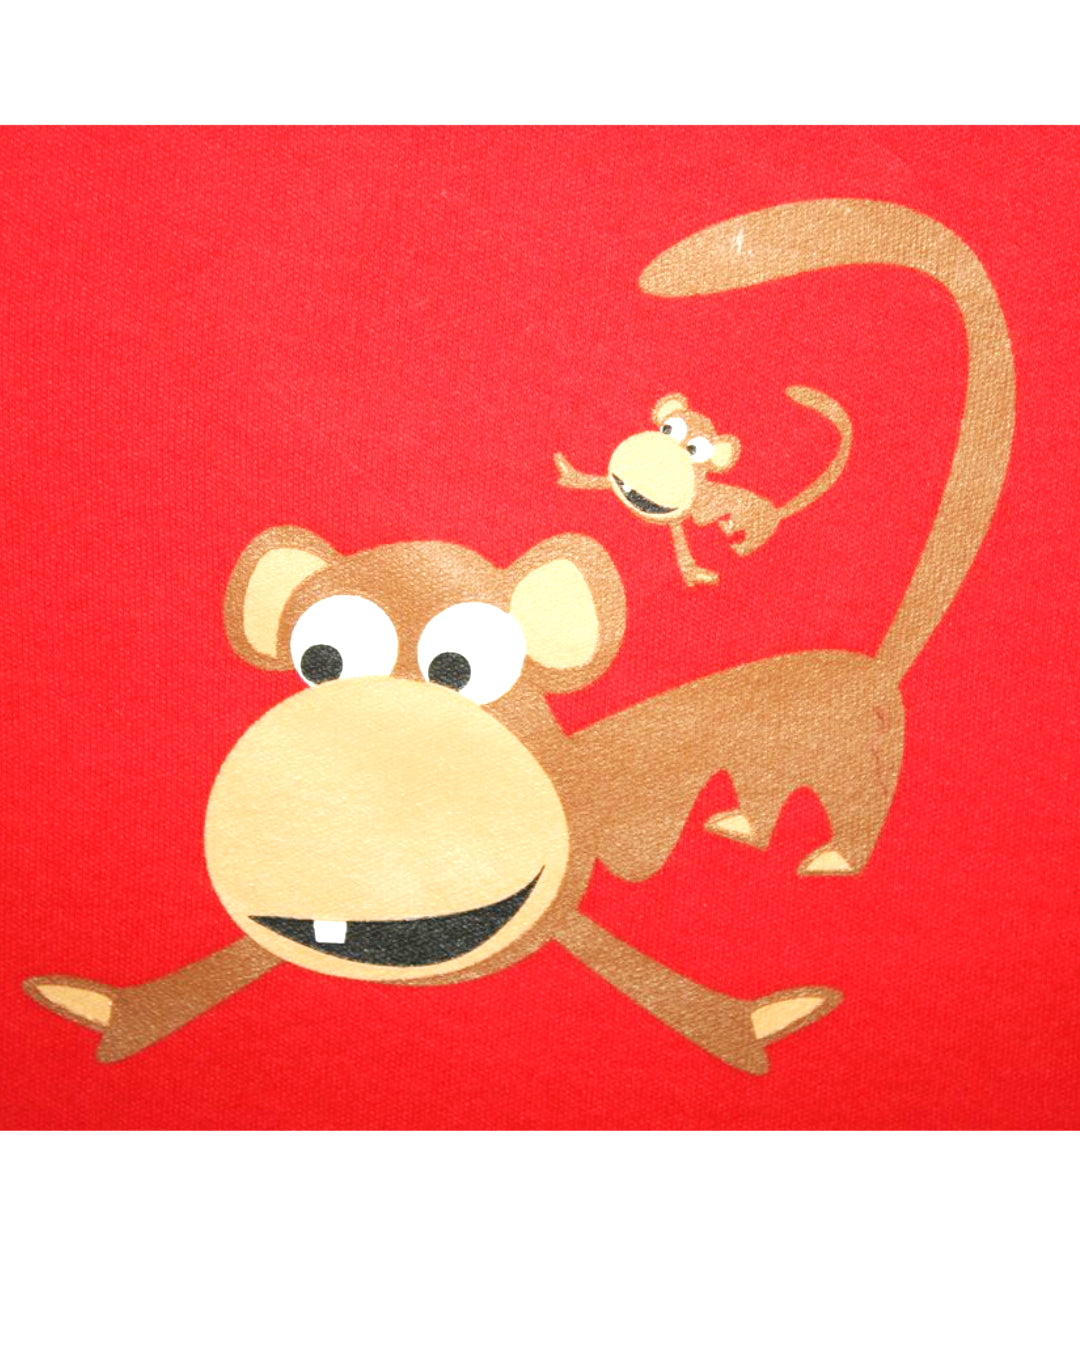 Roter KurzOverall mit braunem Affen